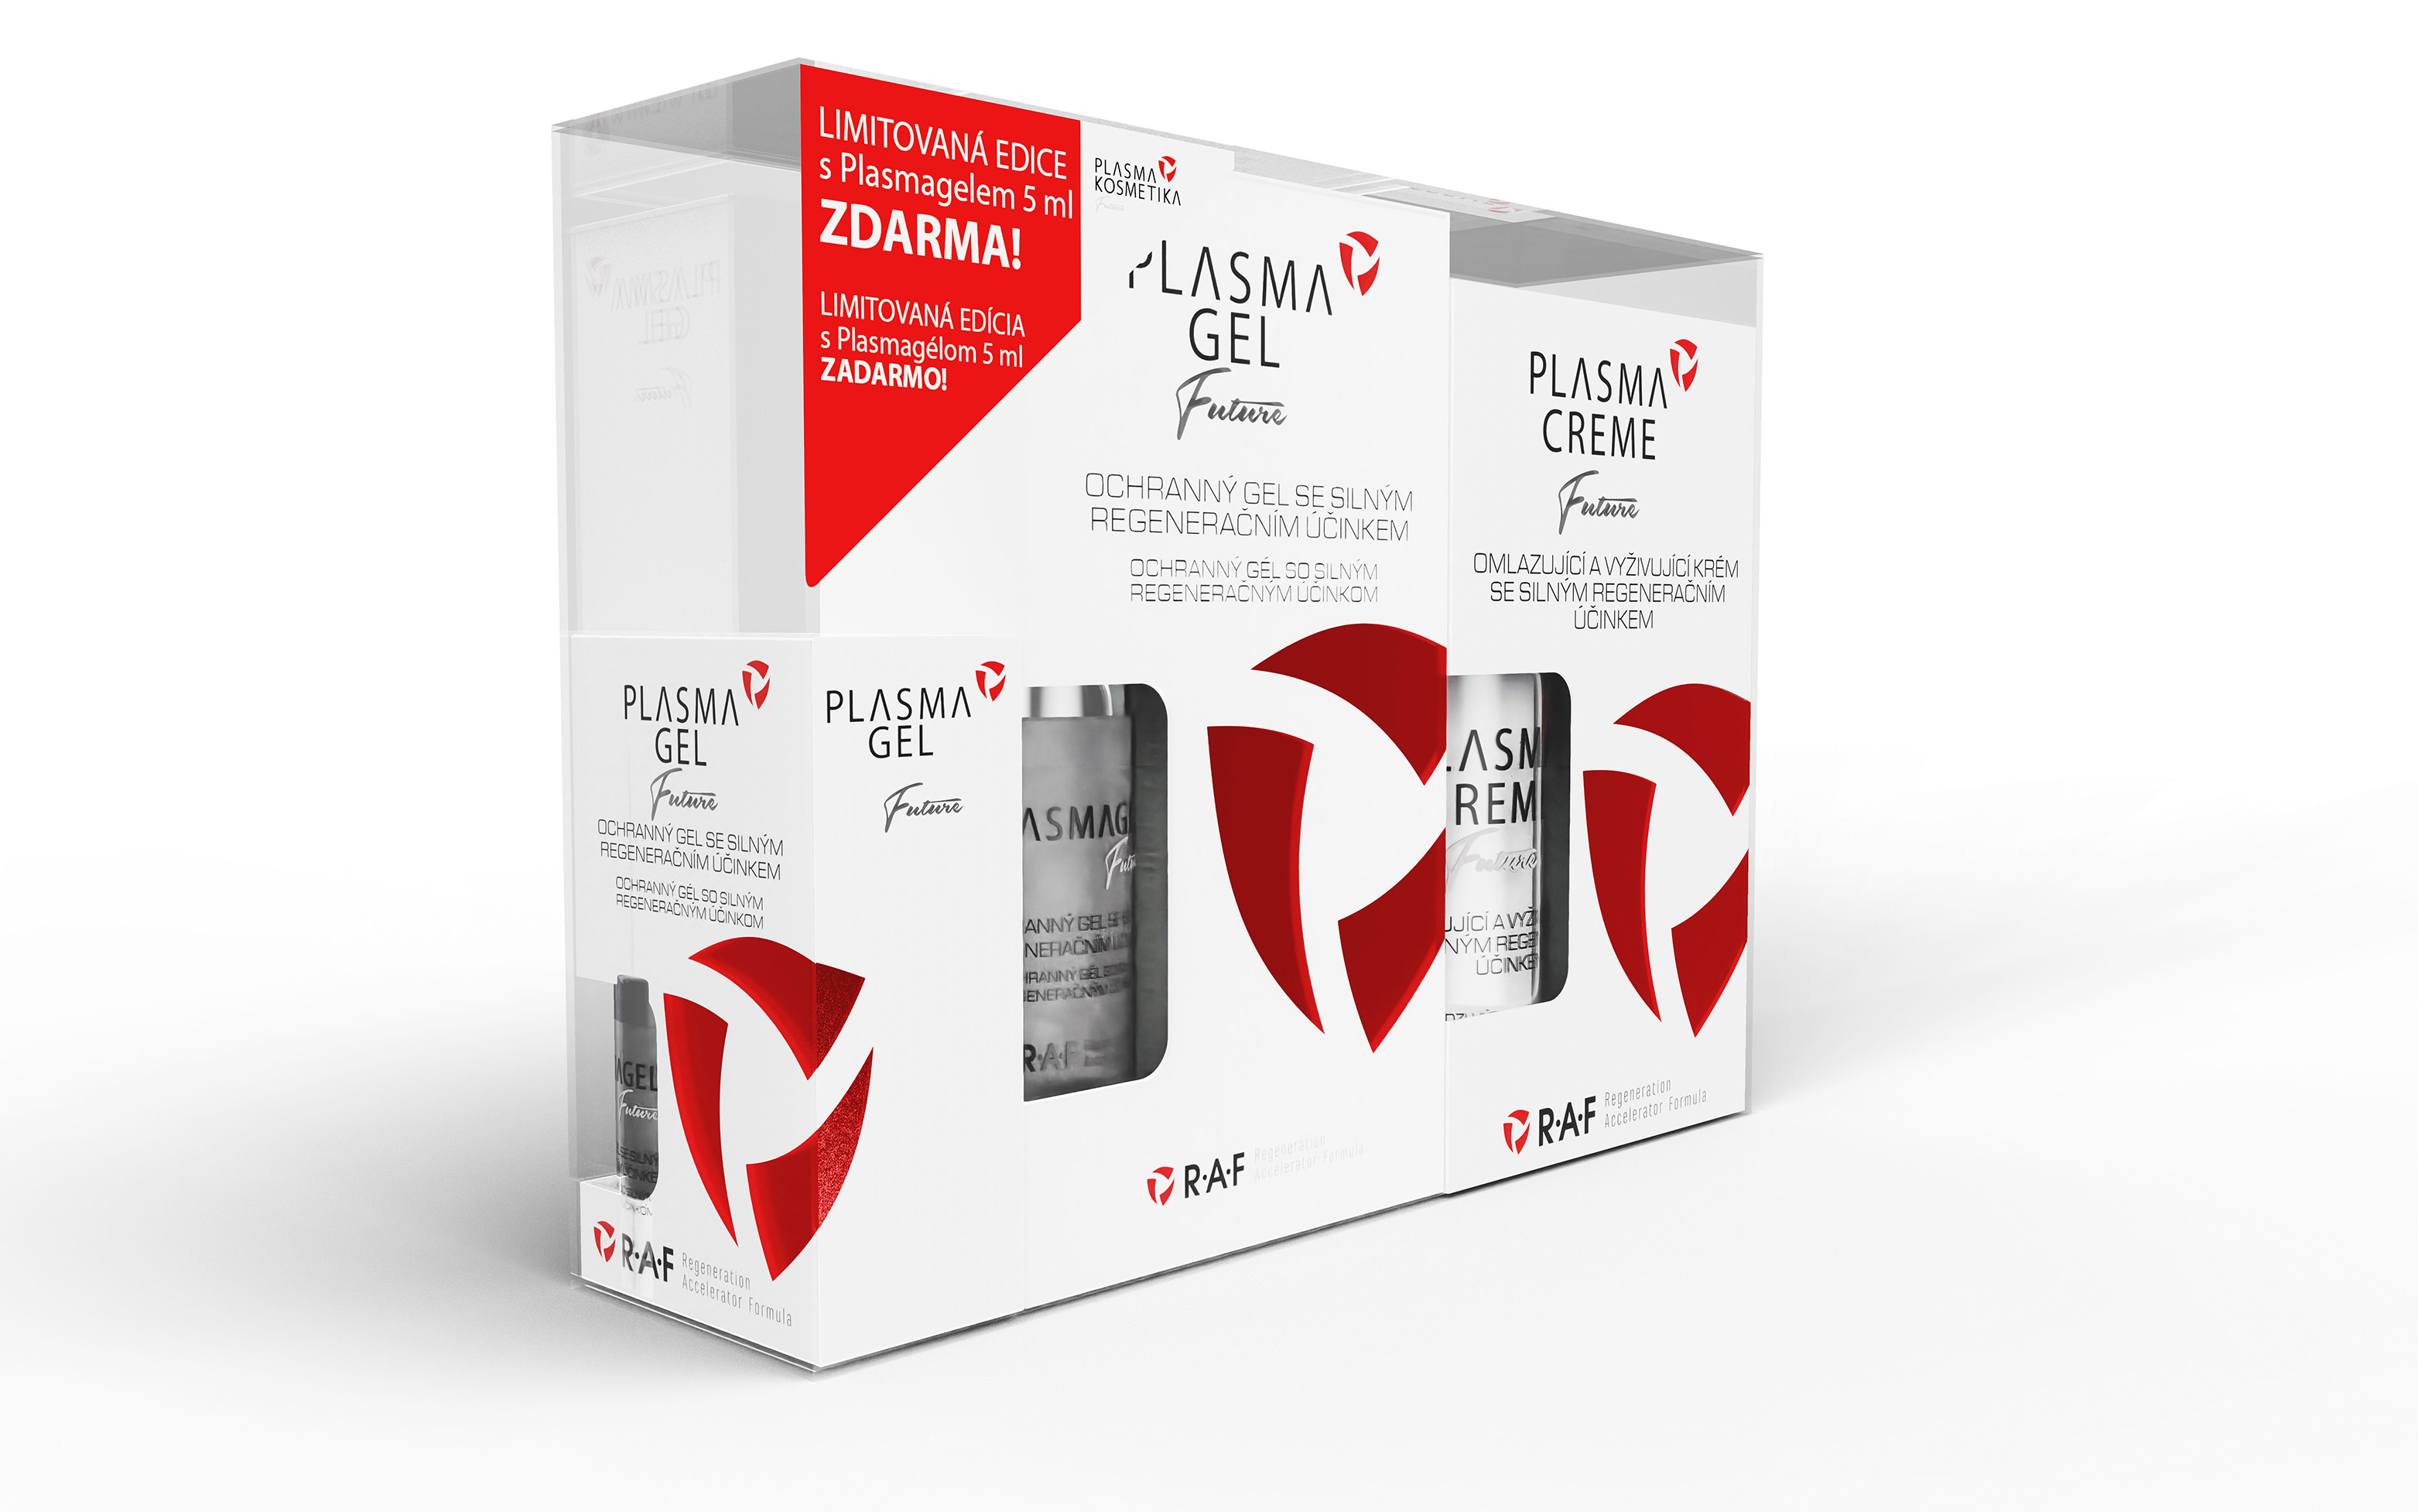 Future Medicine s.r.o. Limitovaná edice Plasmakosmetiky s Plasmagelem 5 ml ZDARMA